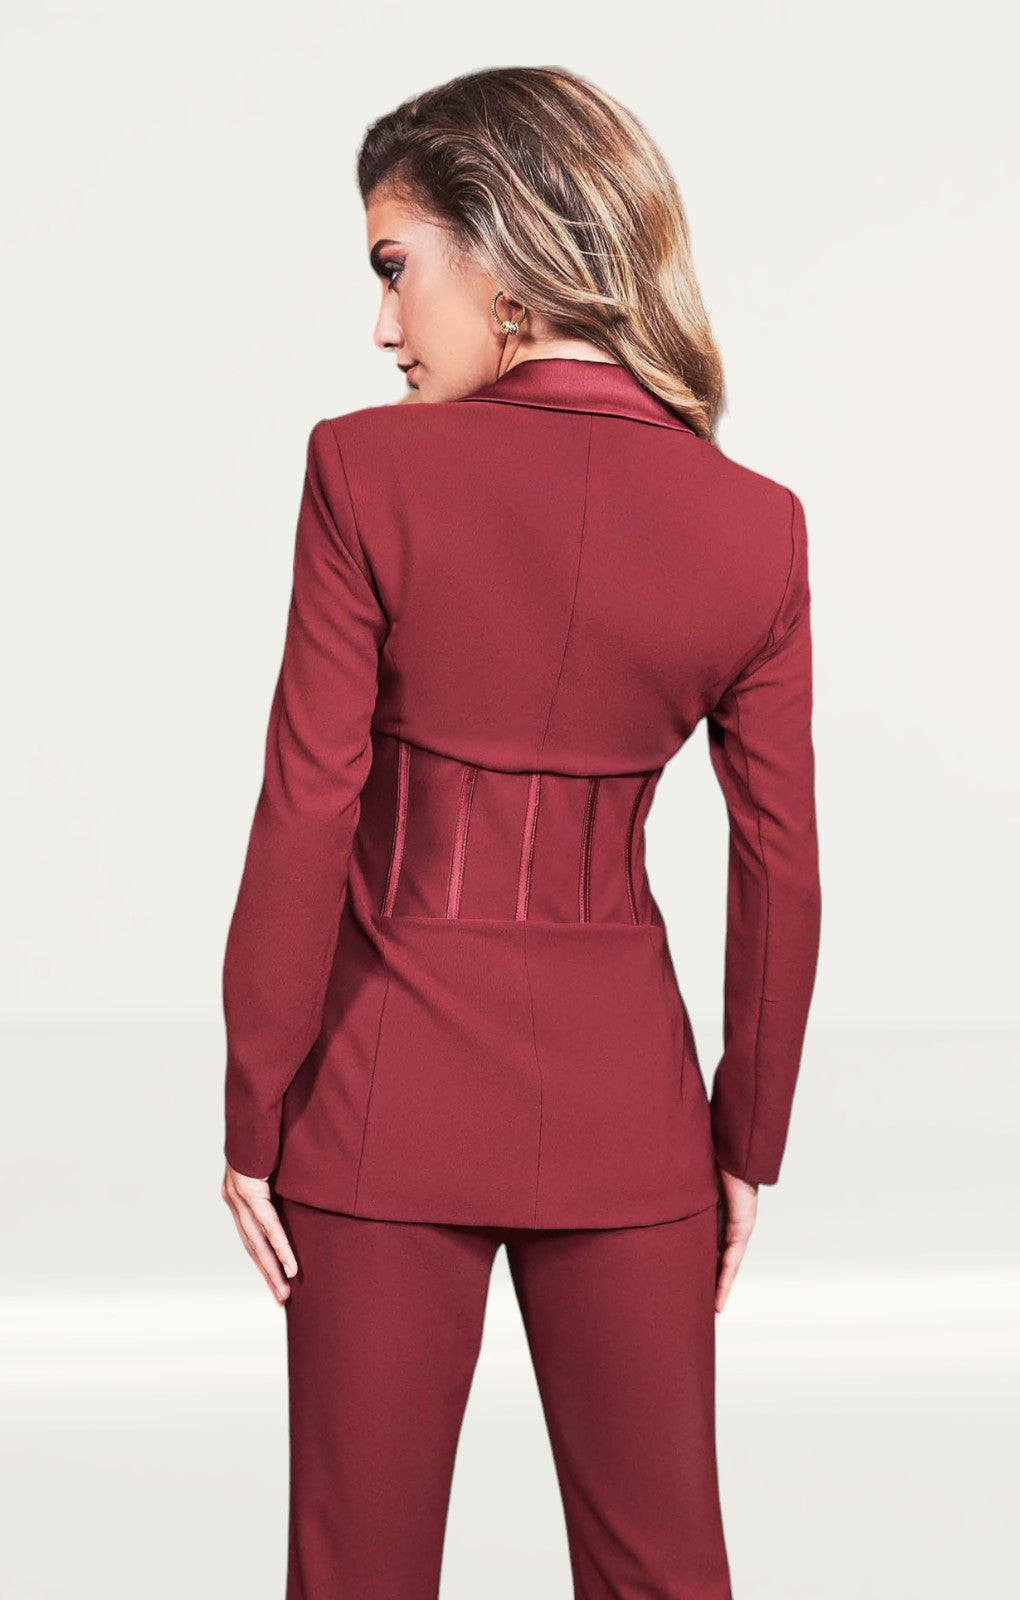 Lavish Alice Burgundy Corset Style Tailored Jacket And Flare Trousers